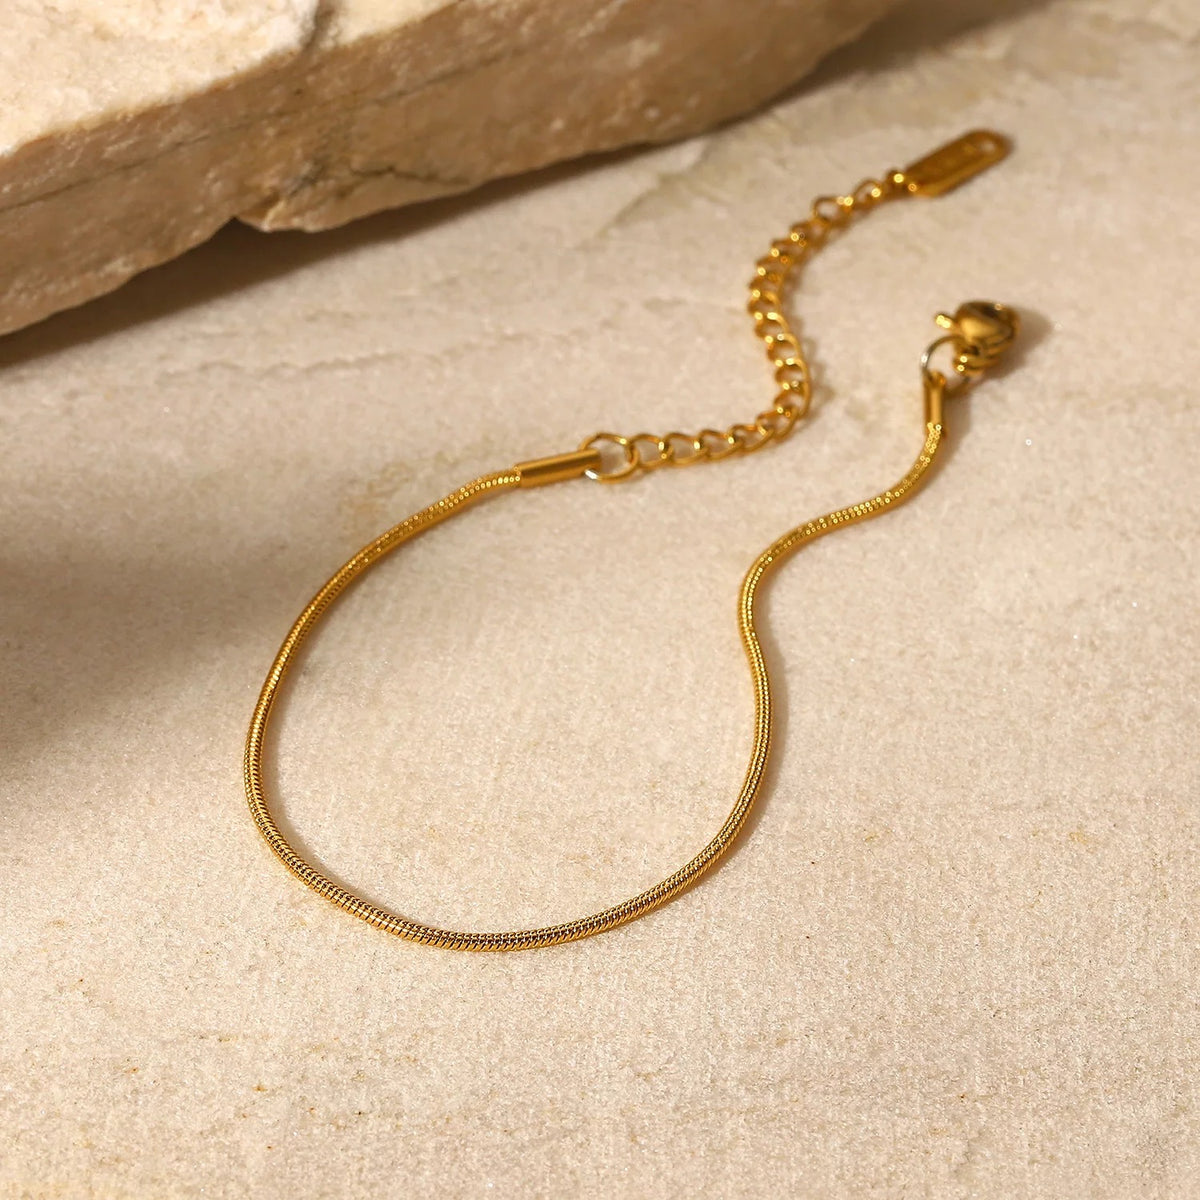 Thin snake bracelet